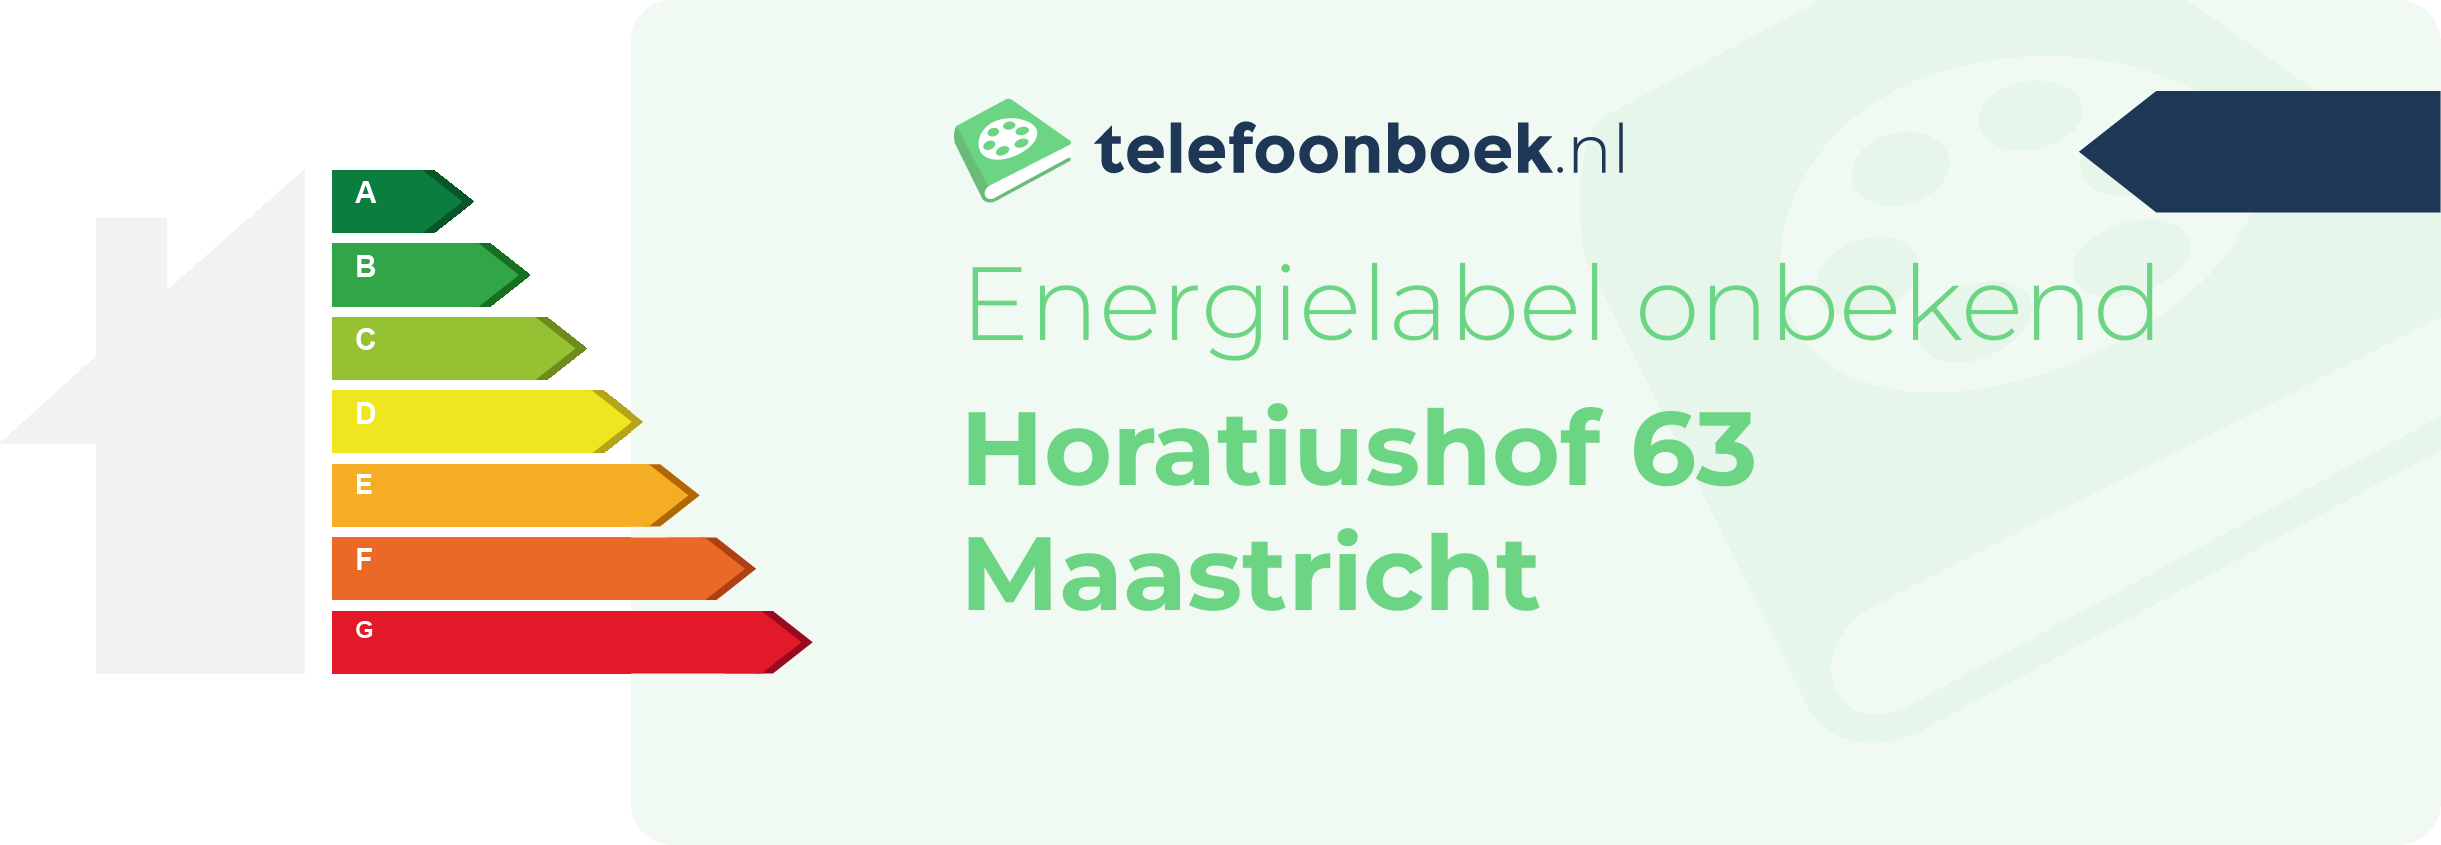 Energielabel Horatiushof 63 Maastricht